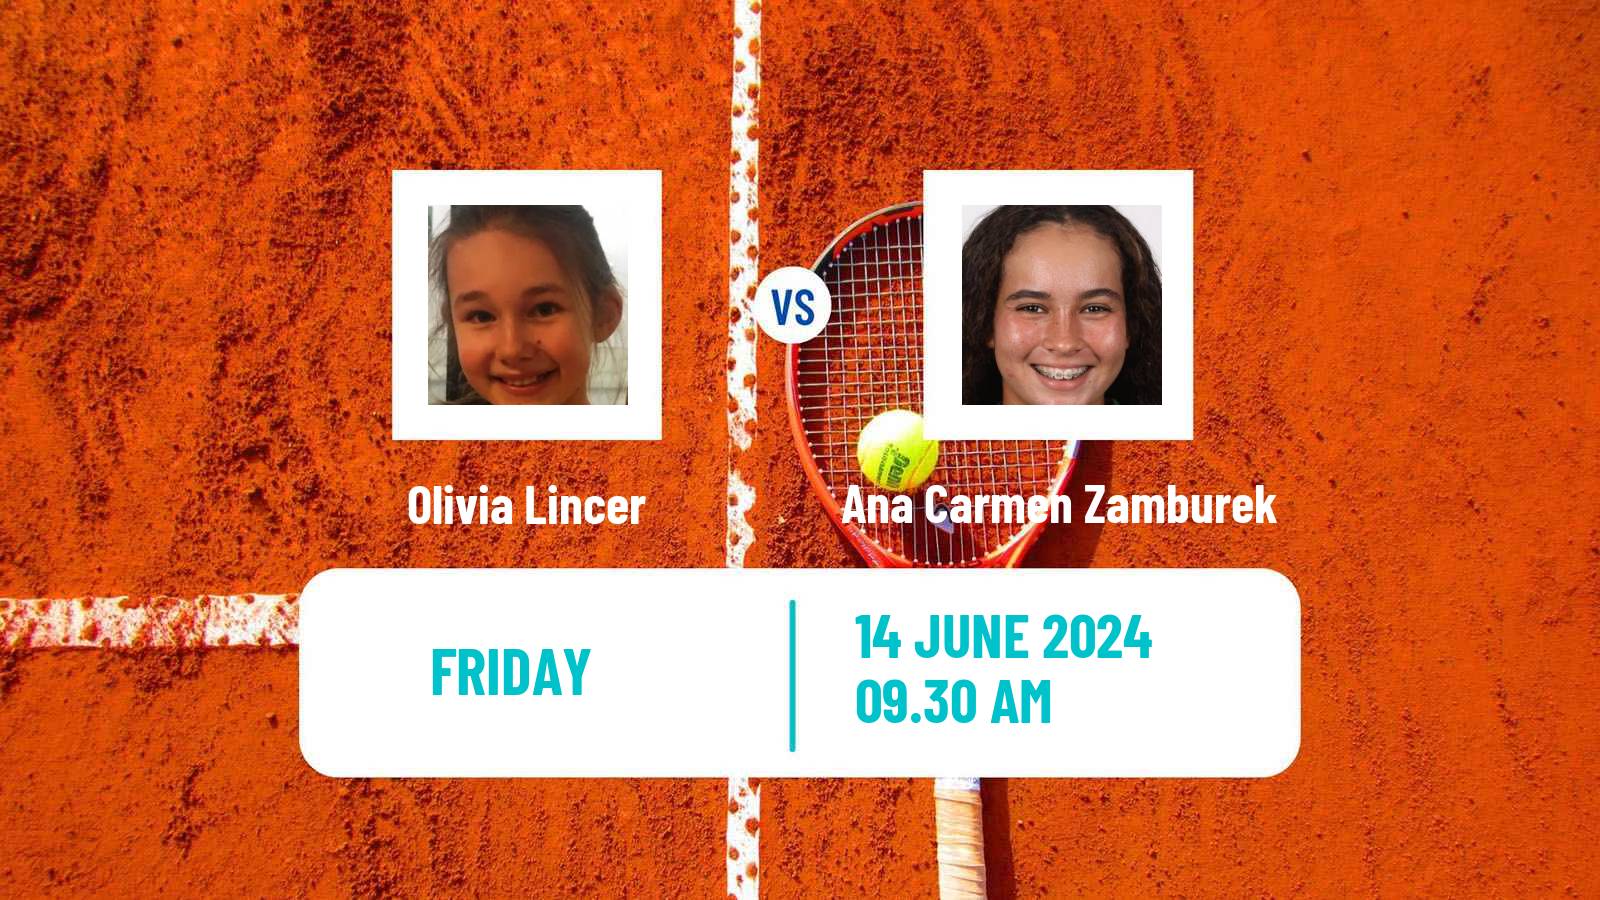 Tennis ITF W15 Santo Domingo 2 Women Olivia Lincer - Ana Carmen Zamburek